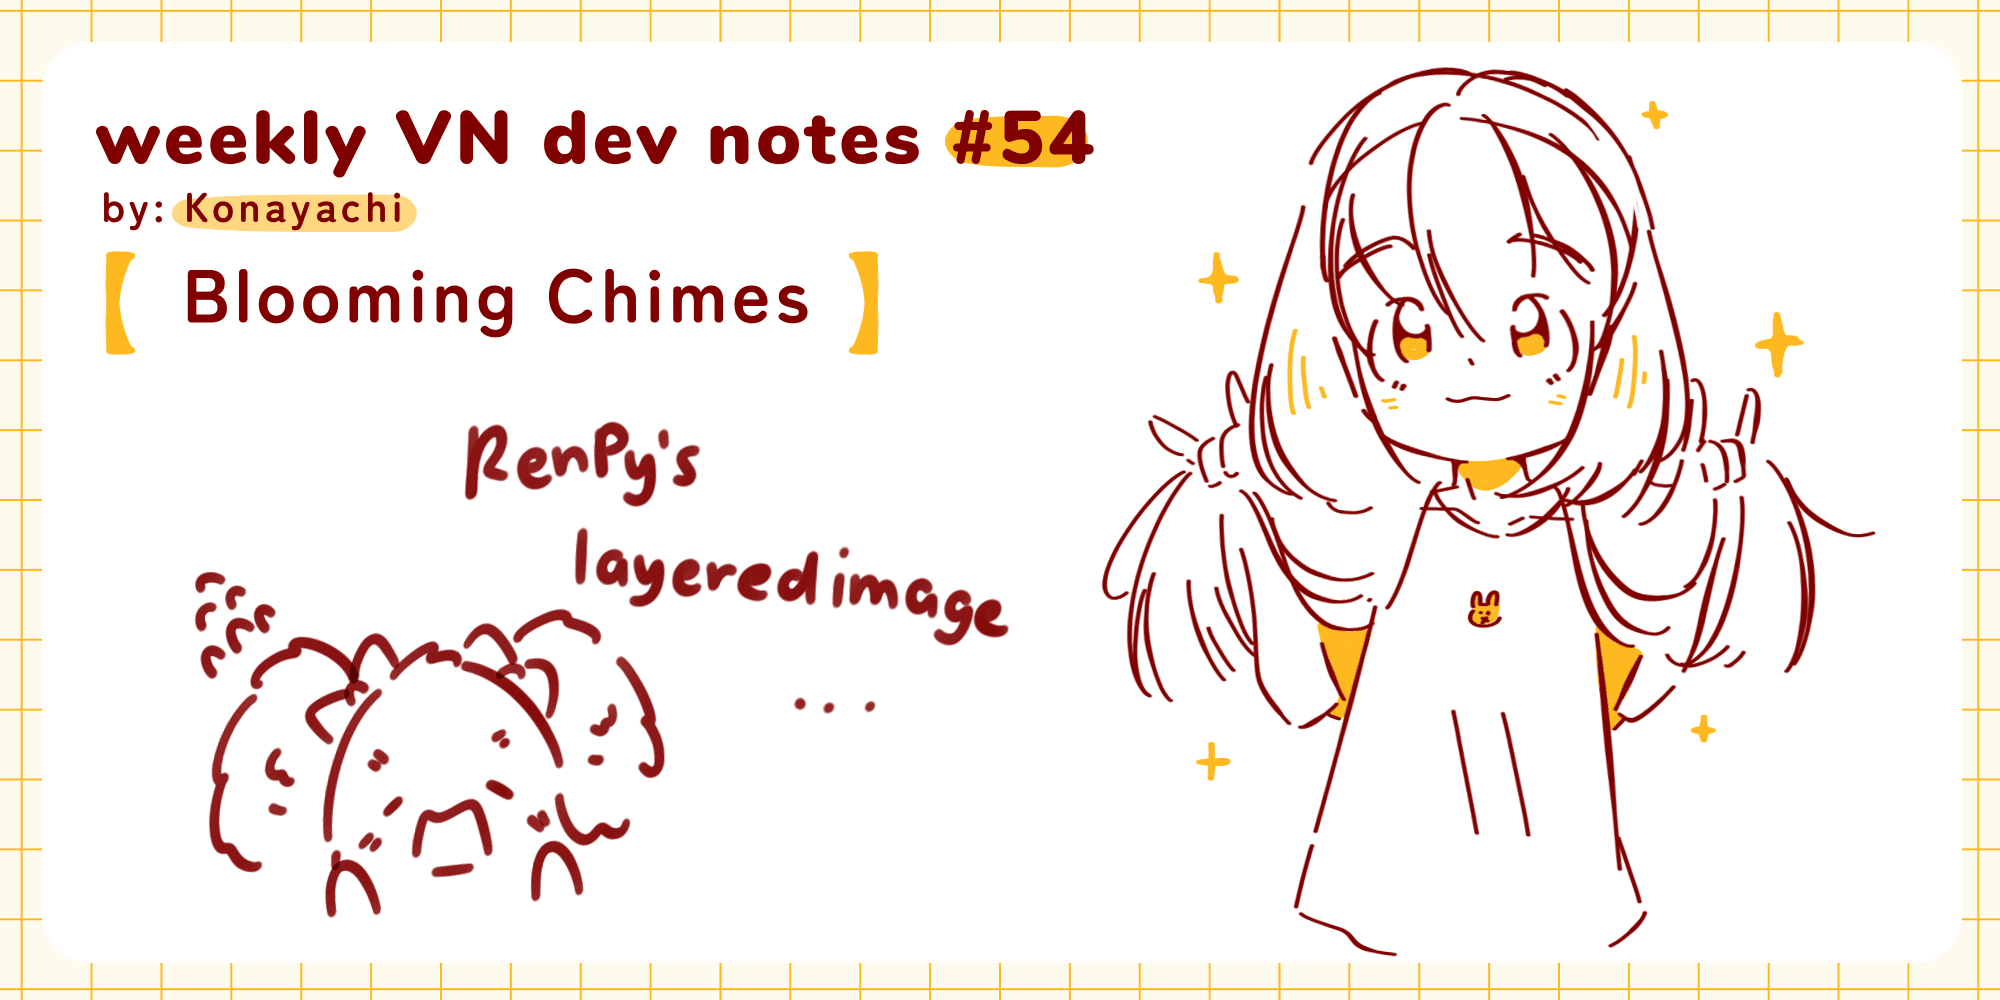 Weekly Dev Notes 54 / Blooming Chimes